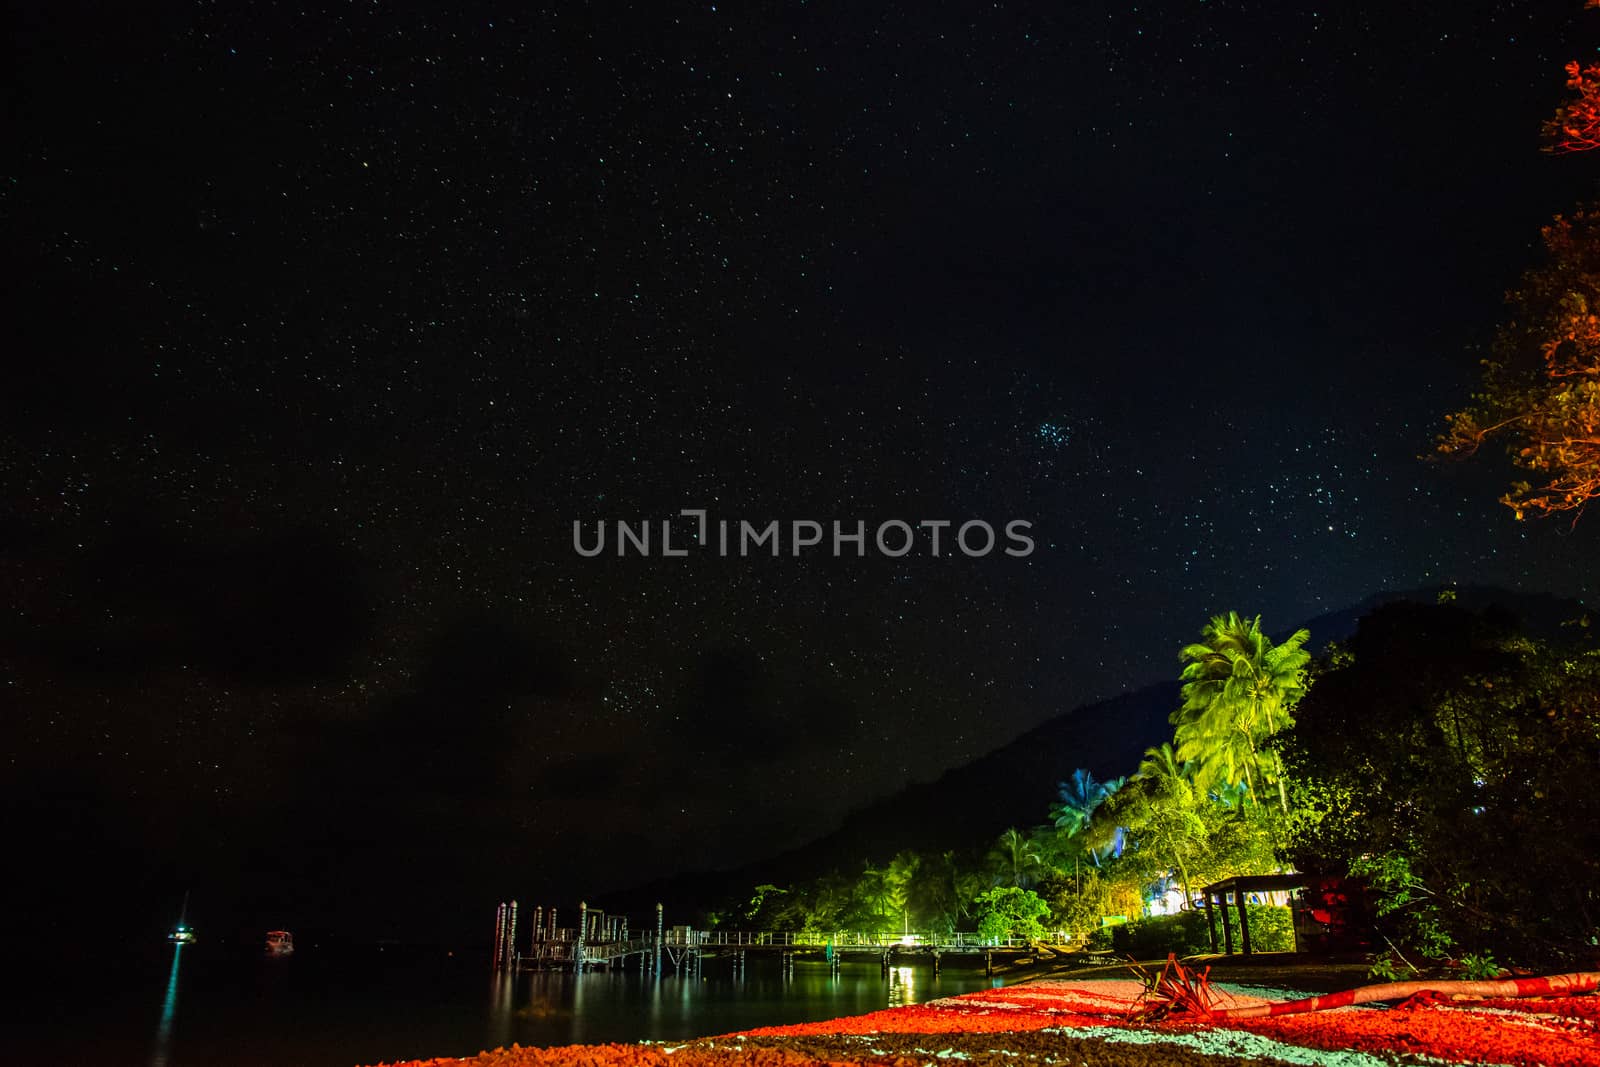 Starry night sky from Fitzroy Island beach, Queensland, Australia by mauricallari